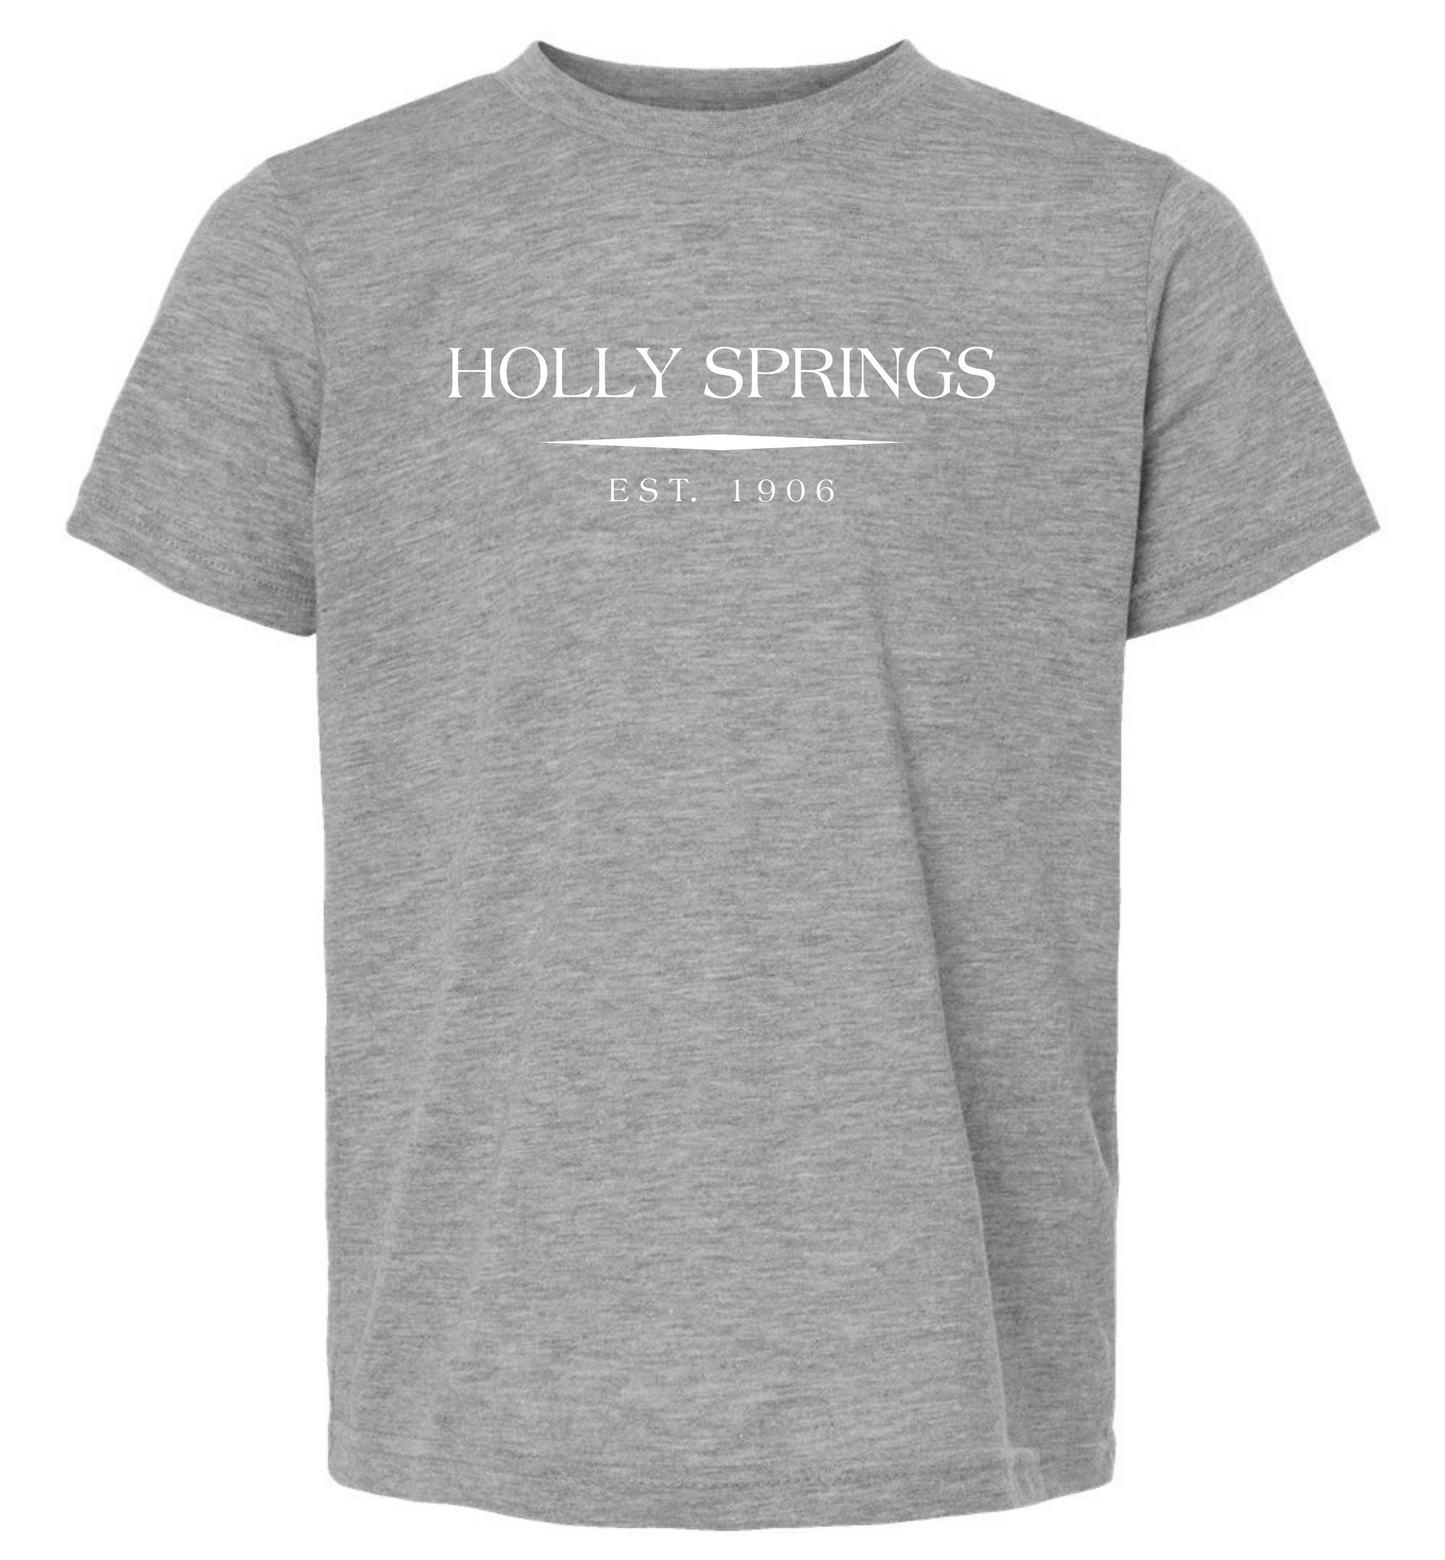 Holly Springs T-Shirt